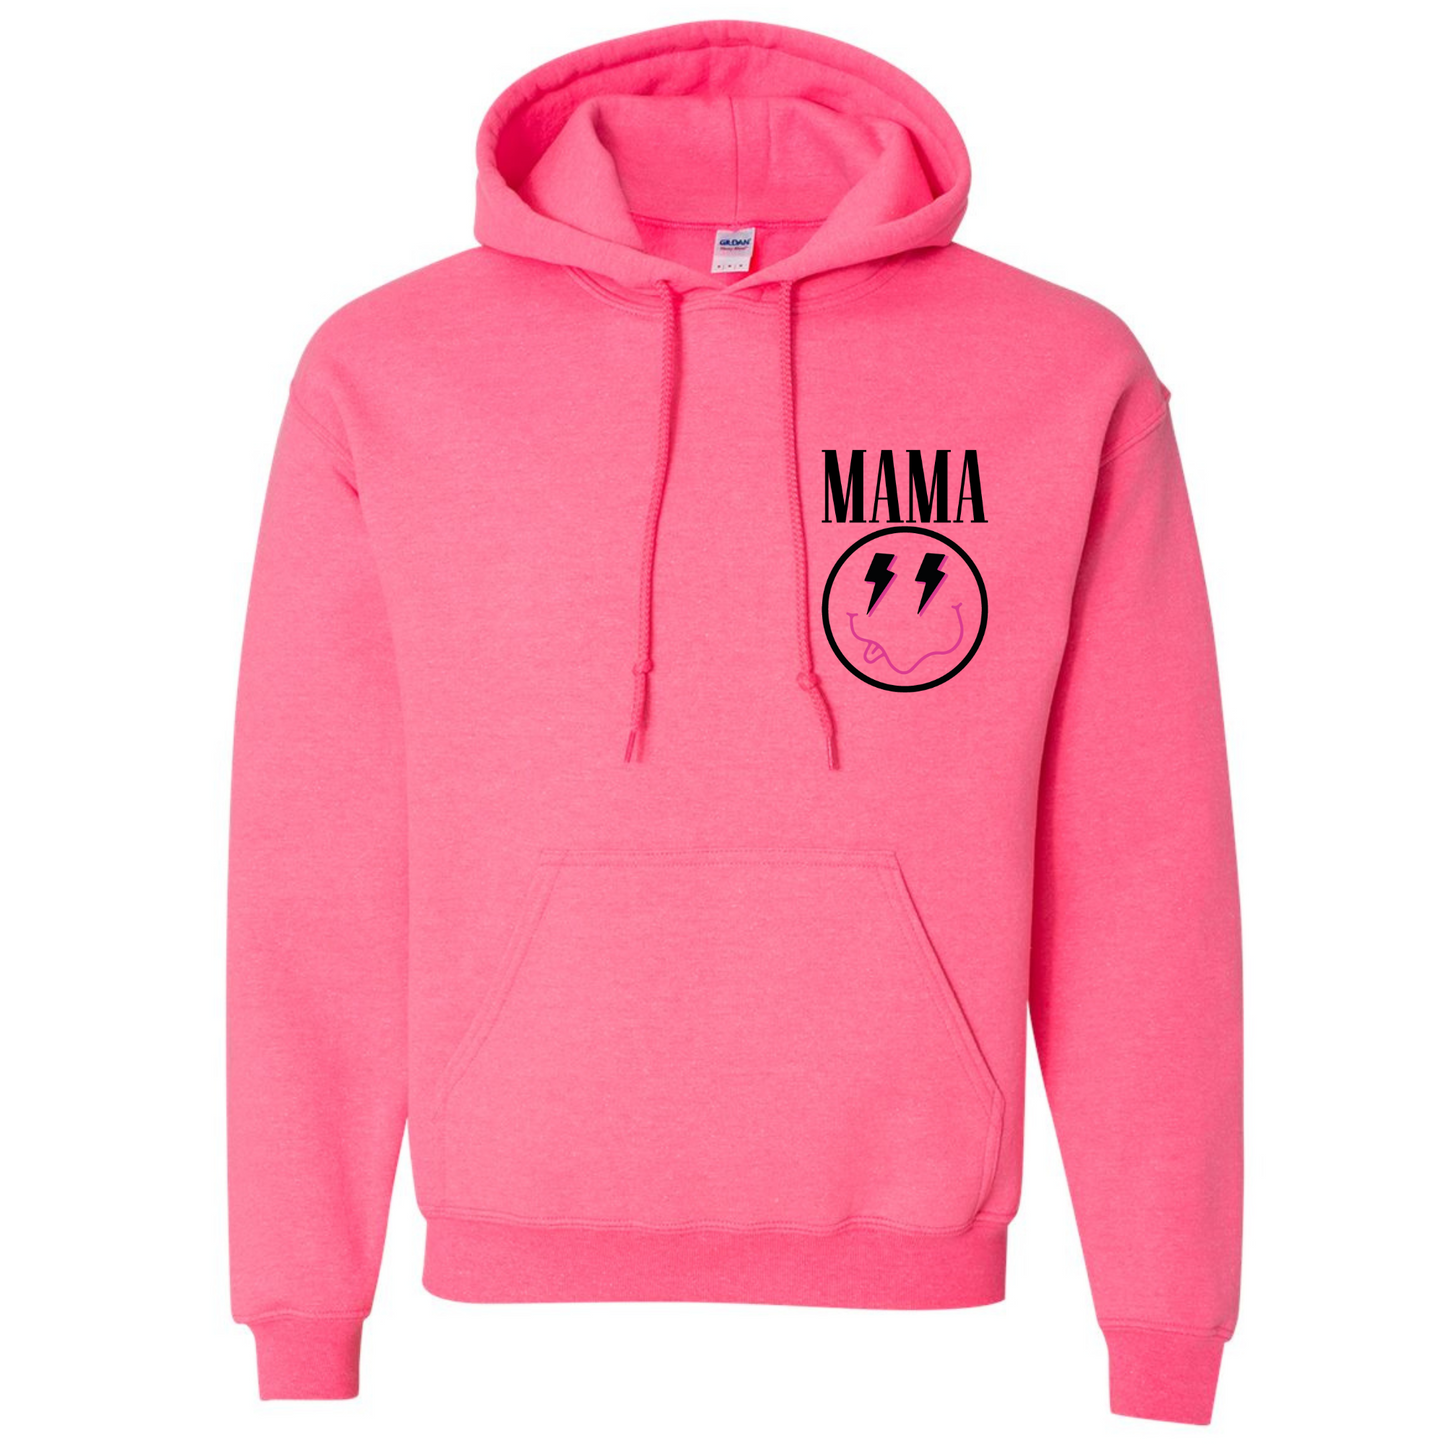 Radical Mama Neon Pink Adult Hoodie